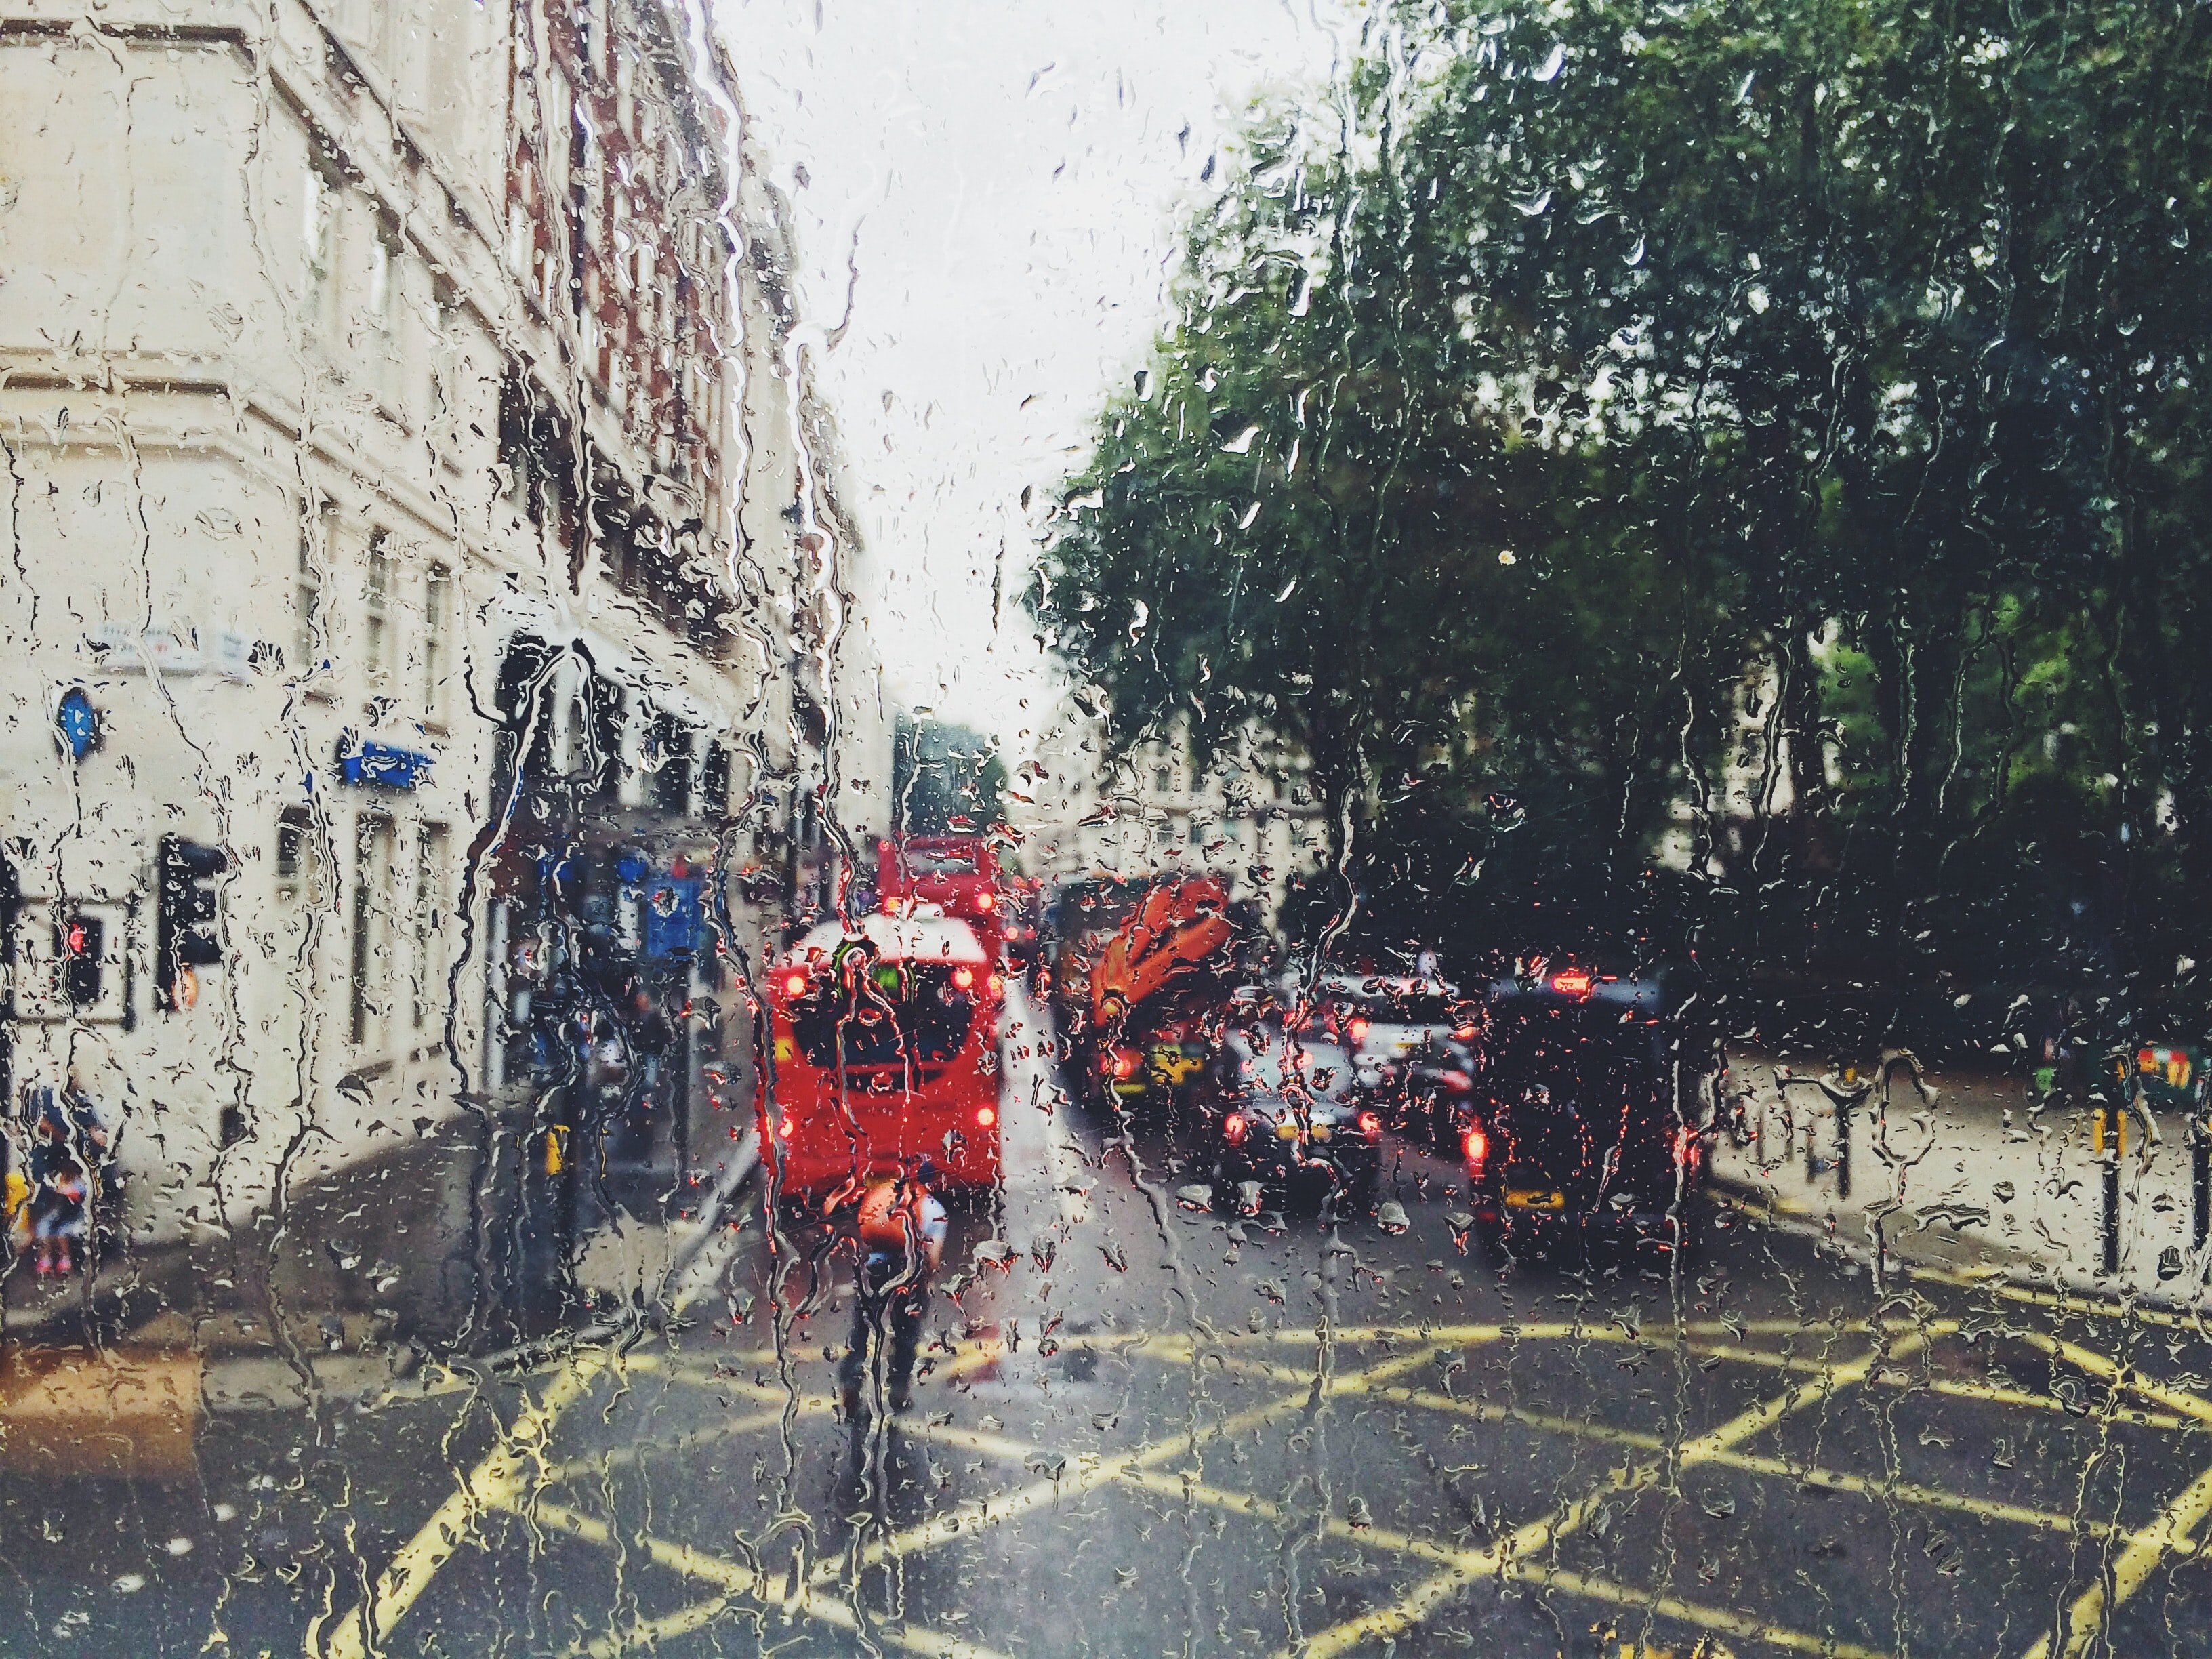 Red bus on a rainy street | Source: Unsplash